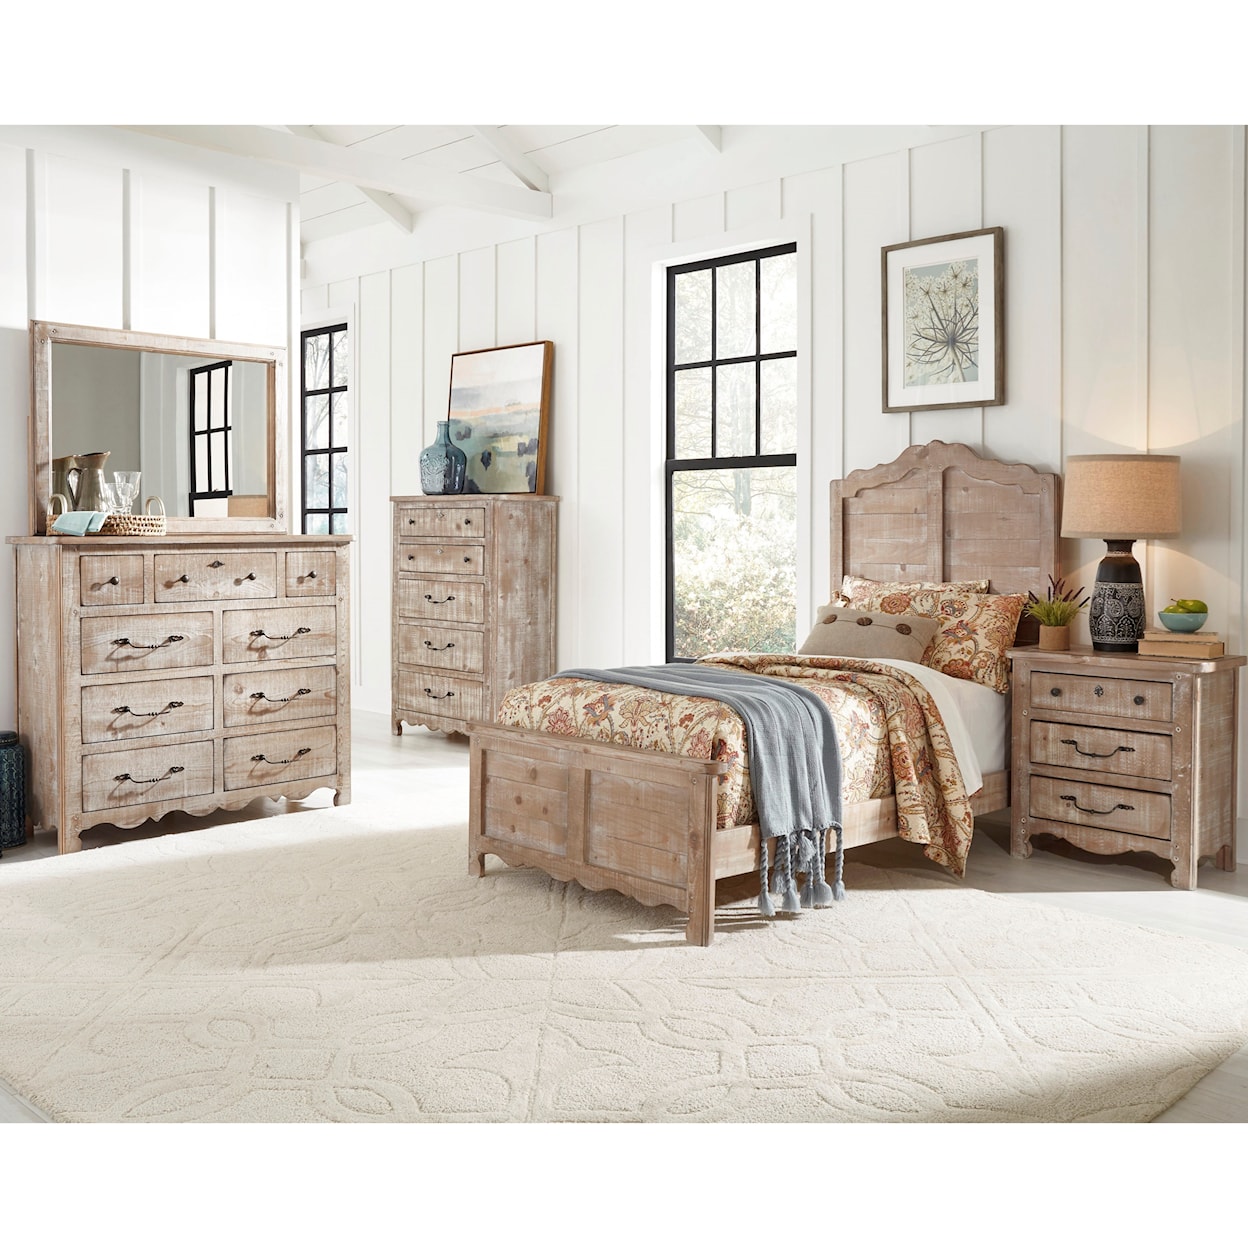 Progressive Furniture Chatsworth Complete Full Panel Bed